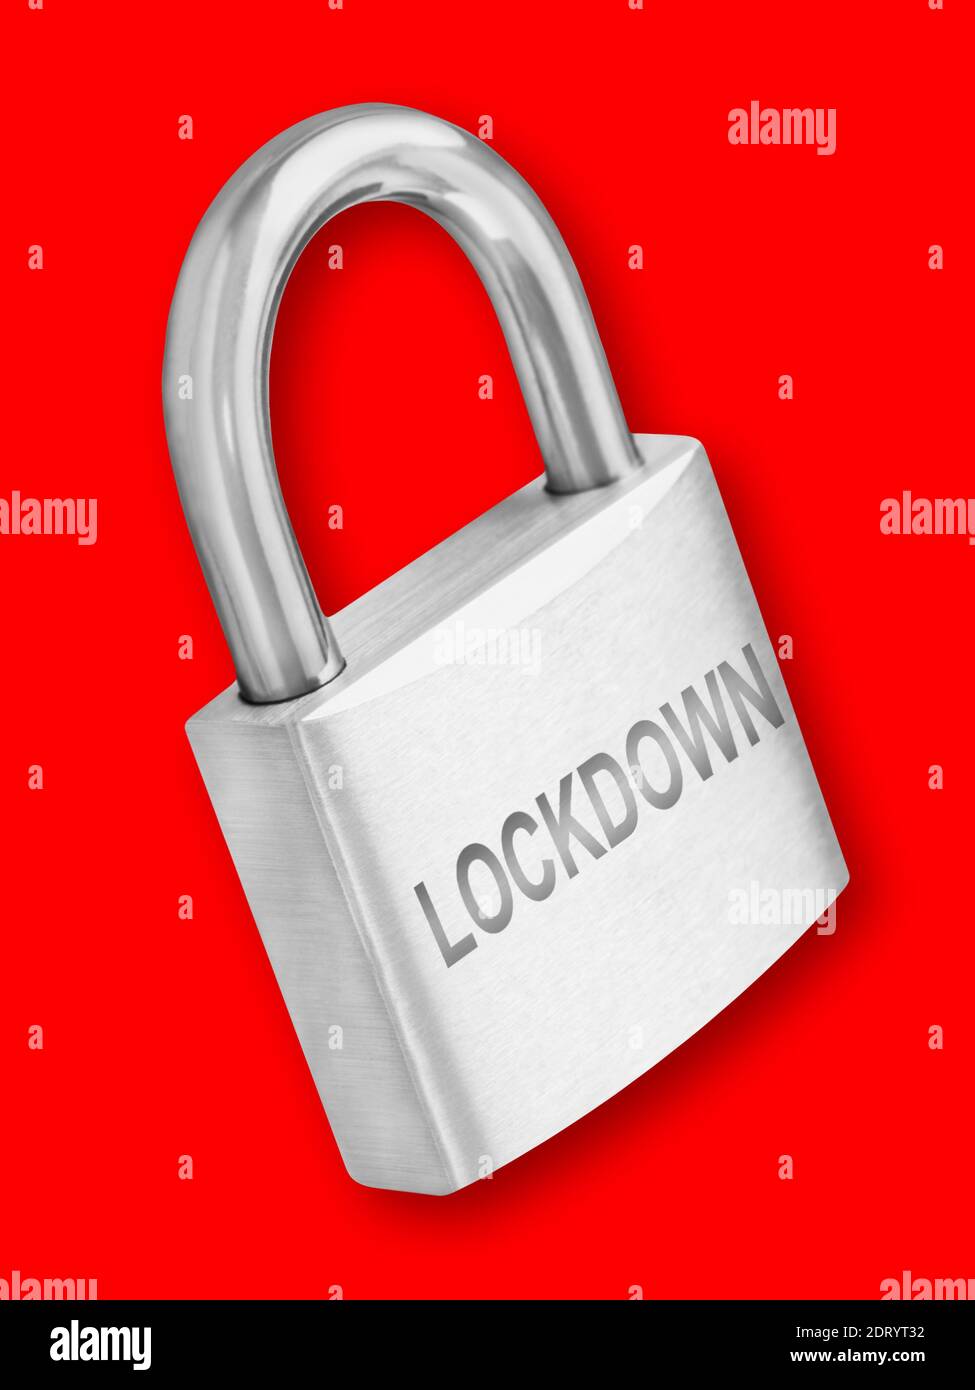 Lockdown Padlock against red background Stock Photo